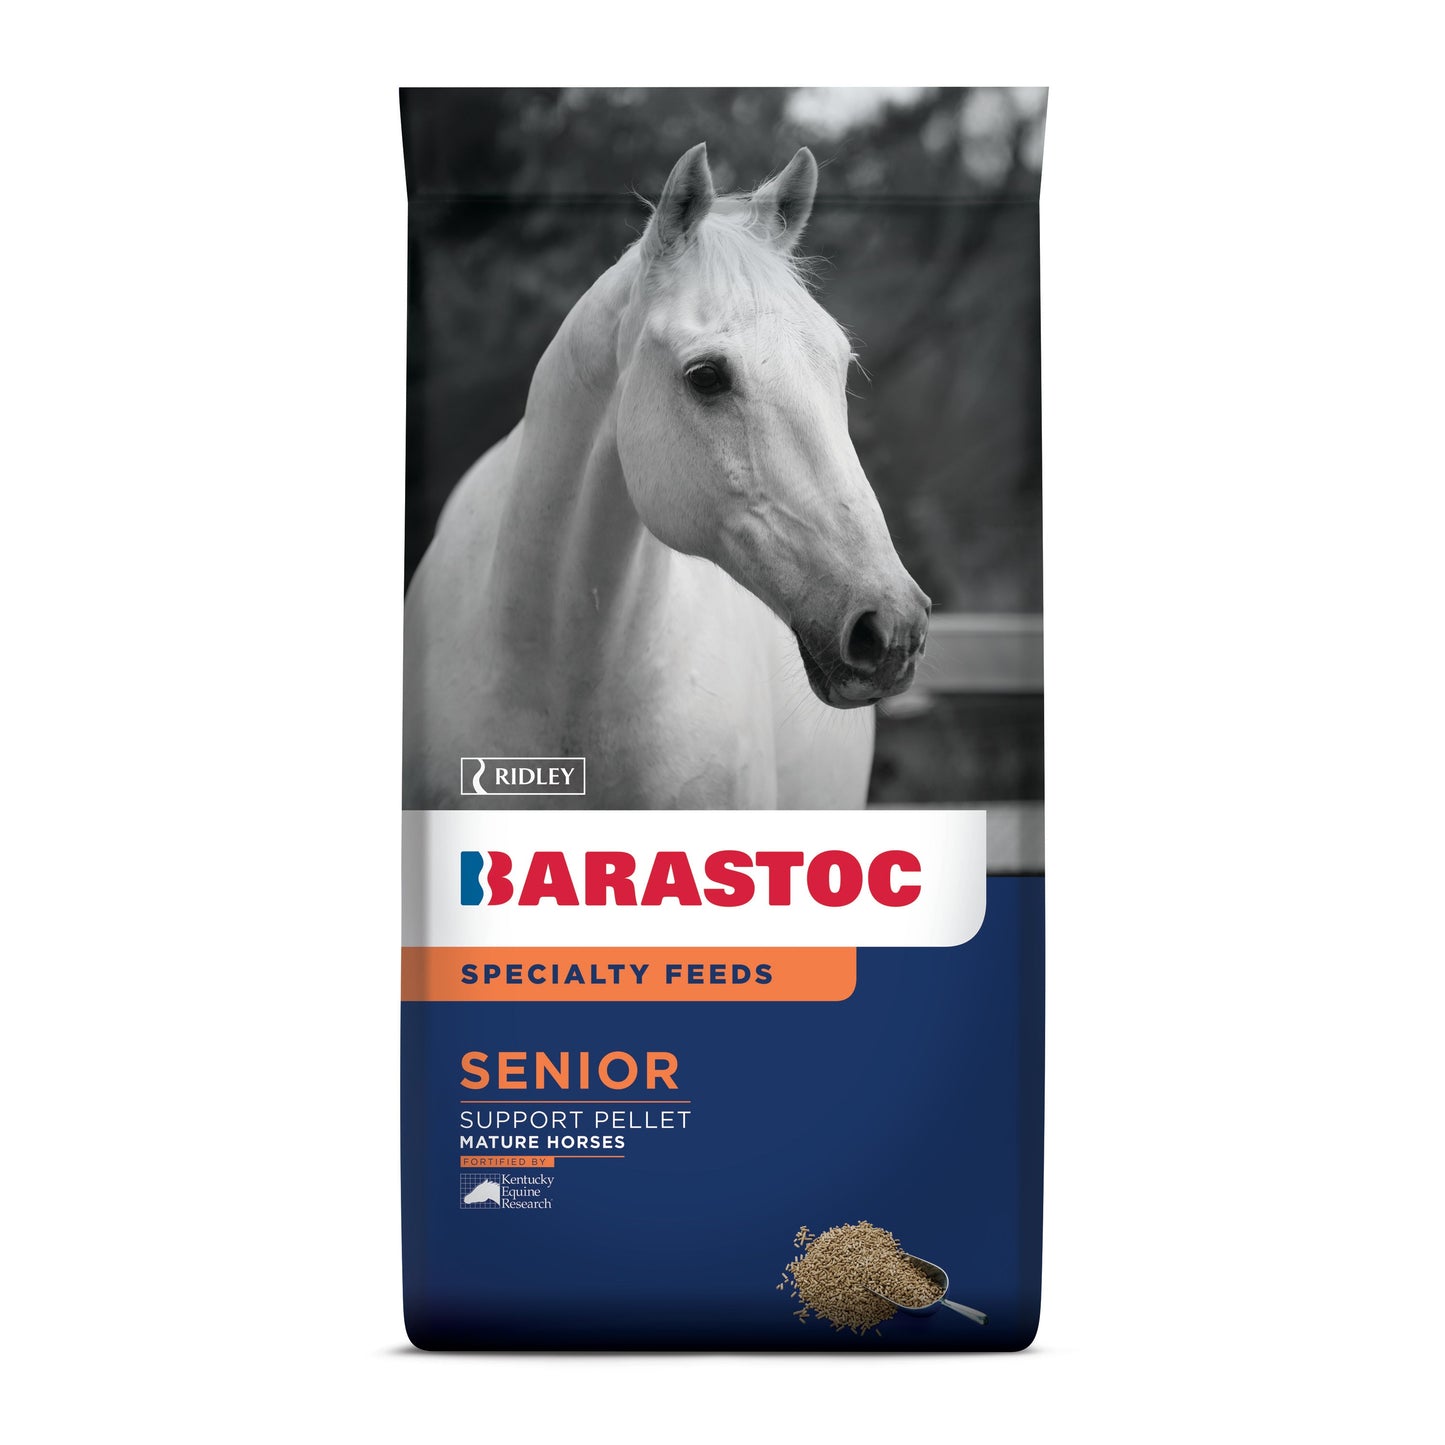 Barastoc Senior 20kg-Southern Sport Horses-The Equestrian